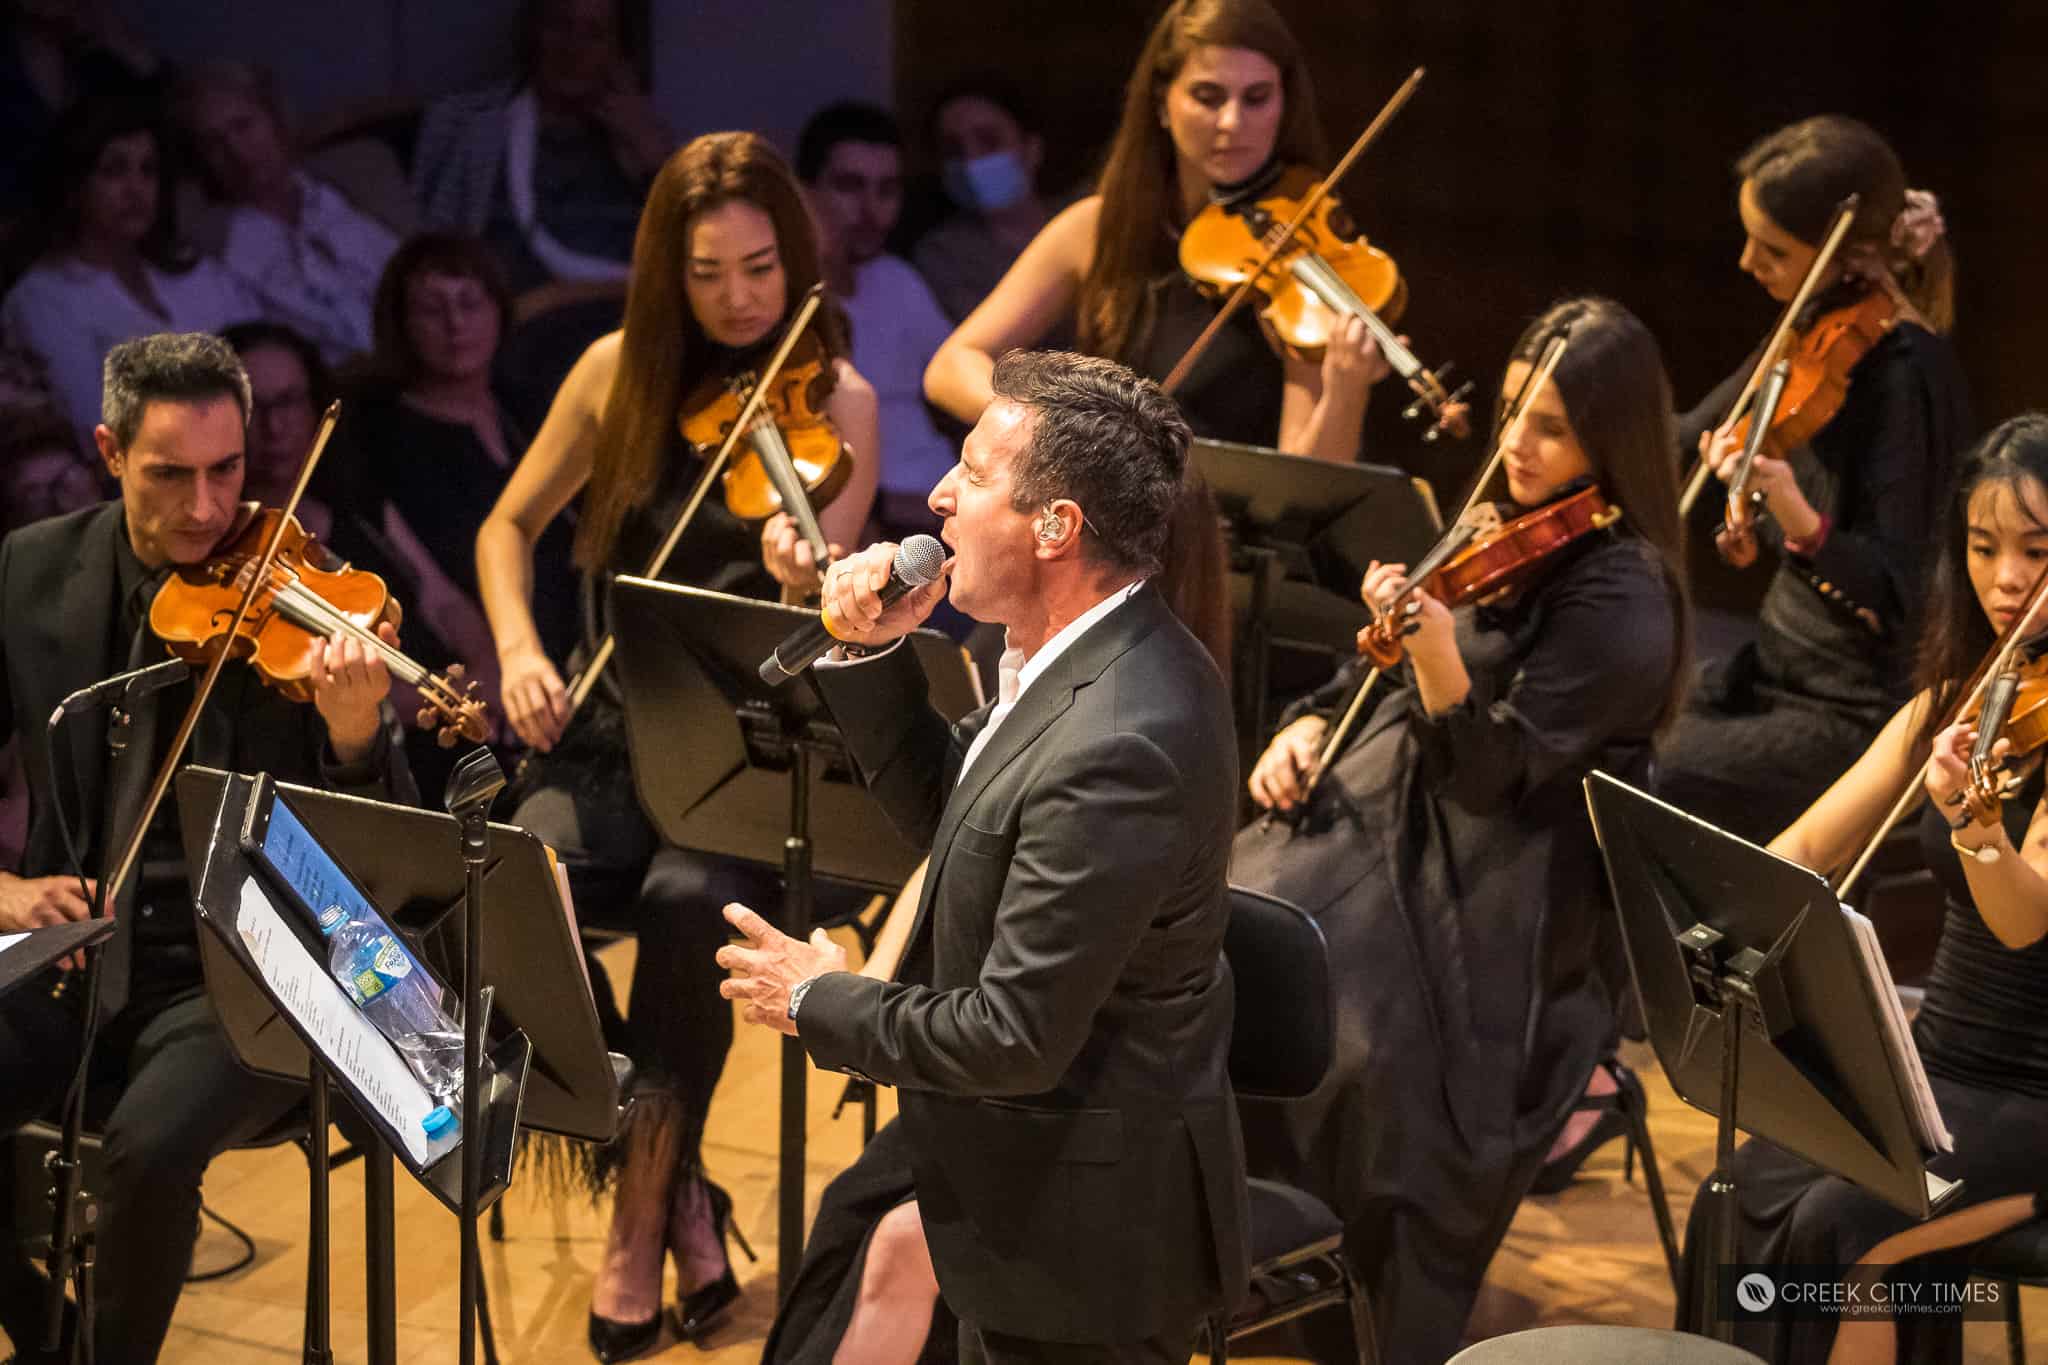 Miki Theodorakis Tribute Concert at City Recital Hall a resounding success 32